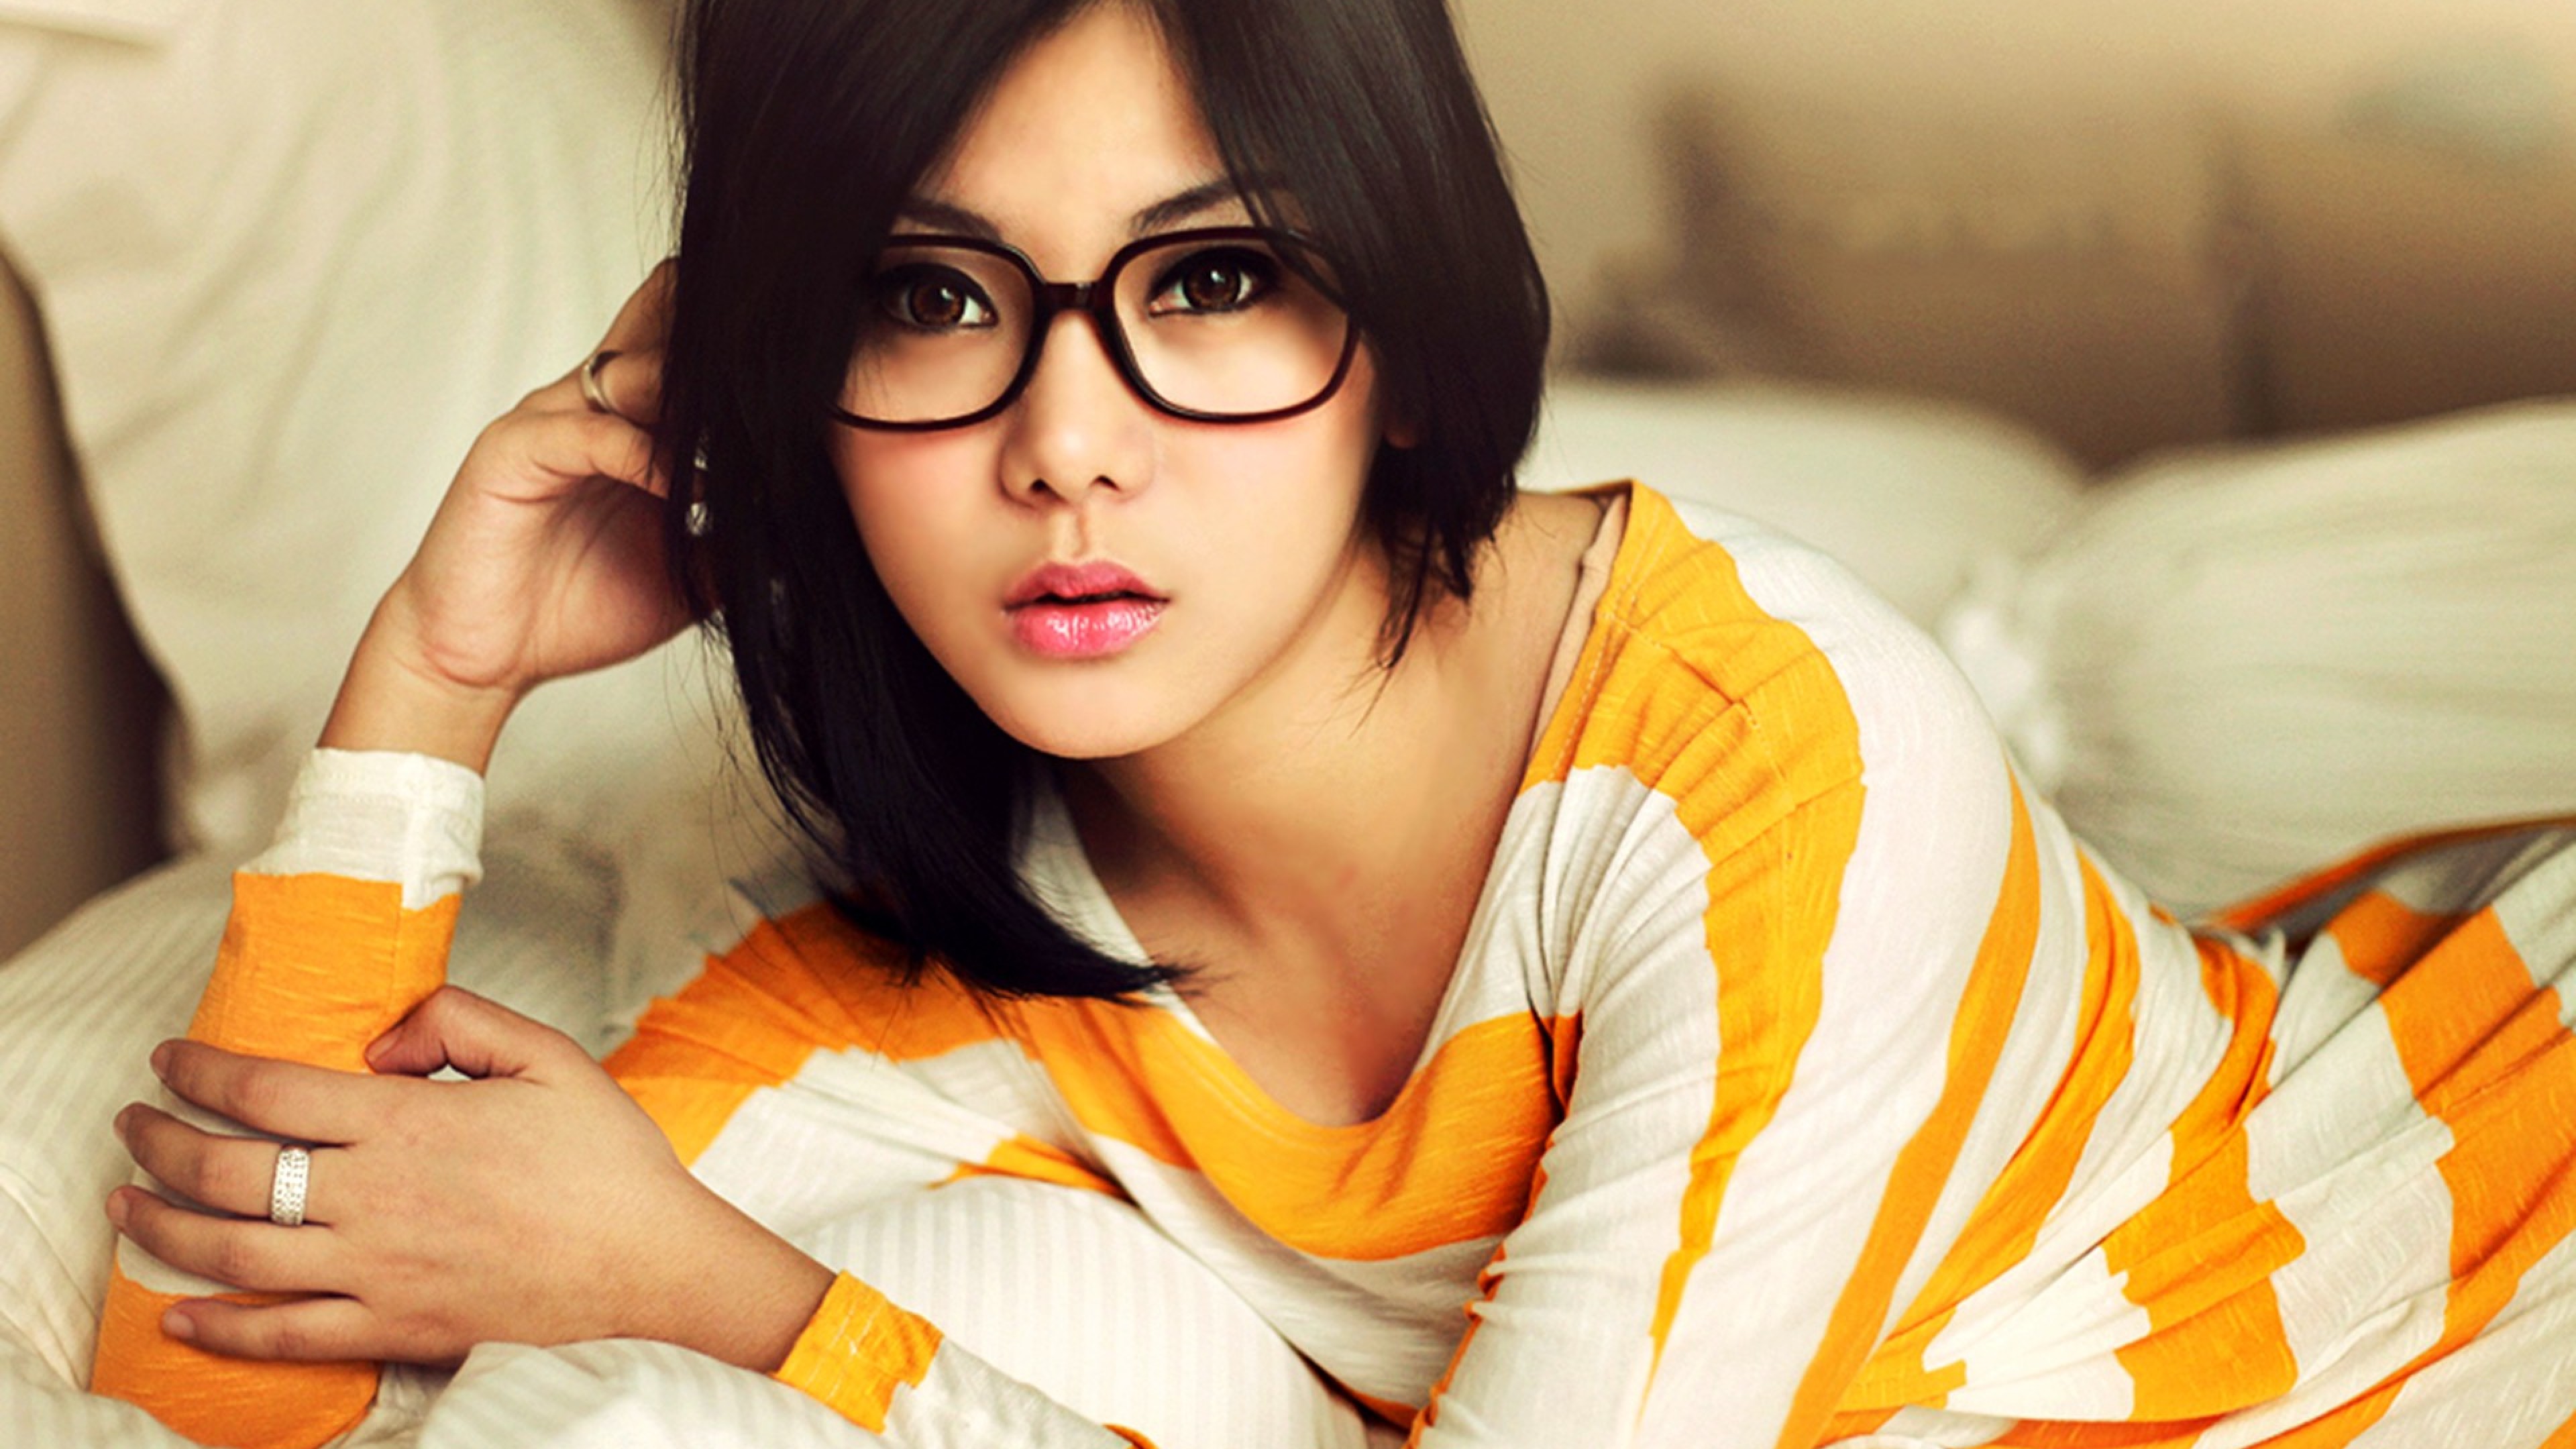 Азиатка трап. Девушка в очках. Милая девушка в очках. Японские девушки в очках. Азиатские девушки.